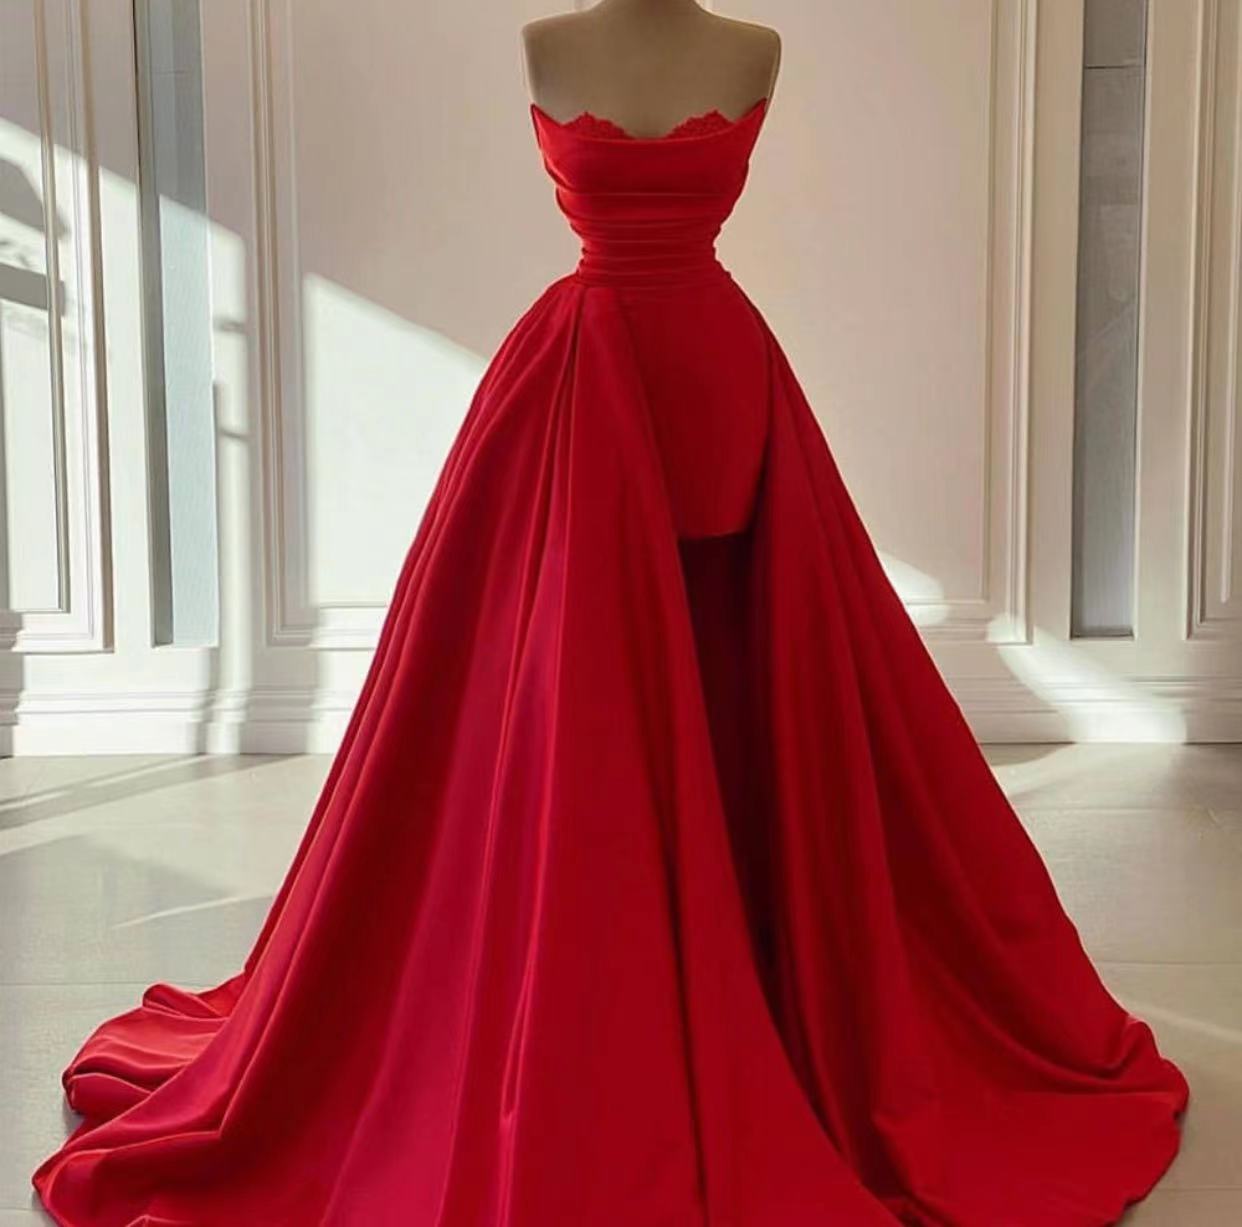 Red Prom Dress, Simple Prom Dresses, Robes De Bal, Vestidos De Fiesta, Robes De Cocktail, Party Dresses, Vestidos De Fiesta De Longo, A Line Prom